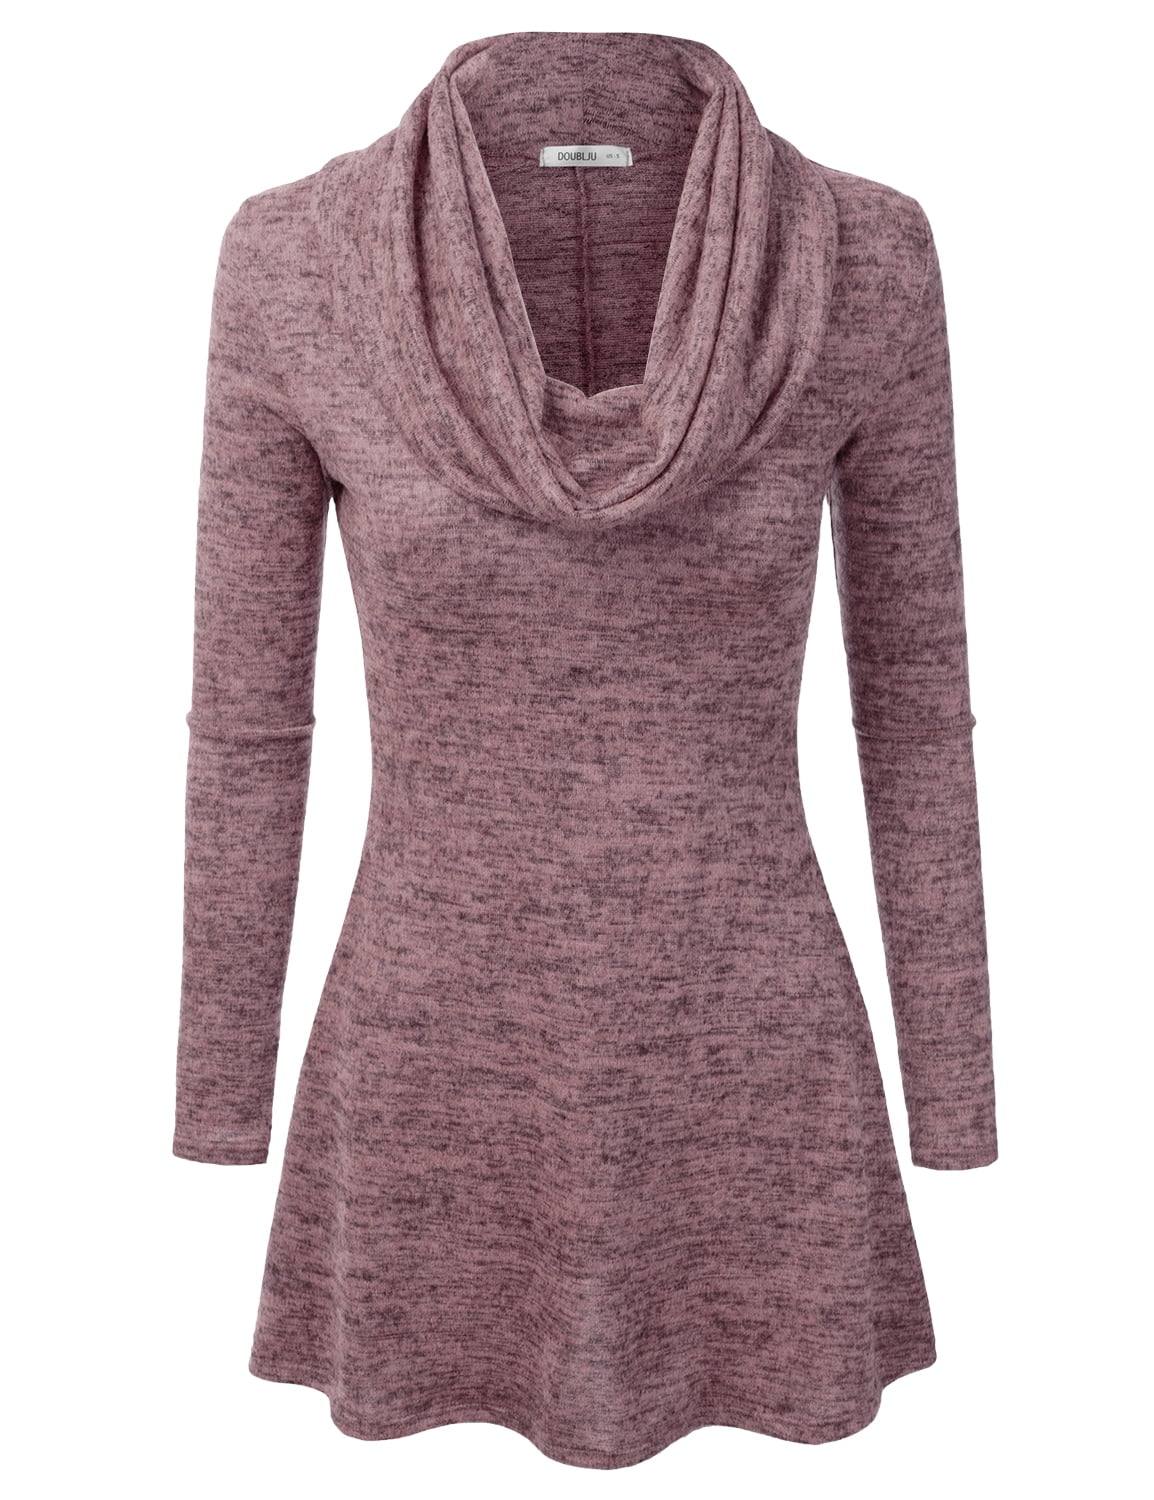 Doublju Womens Long Sleeve Cowl Neck A-Line Tunic Sweater Dress MAUVE ...